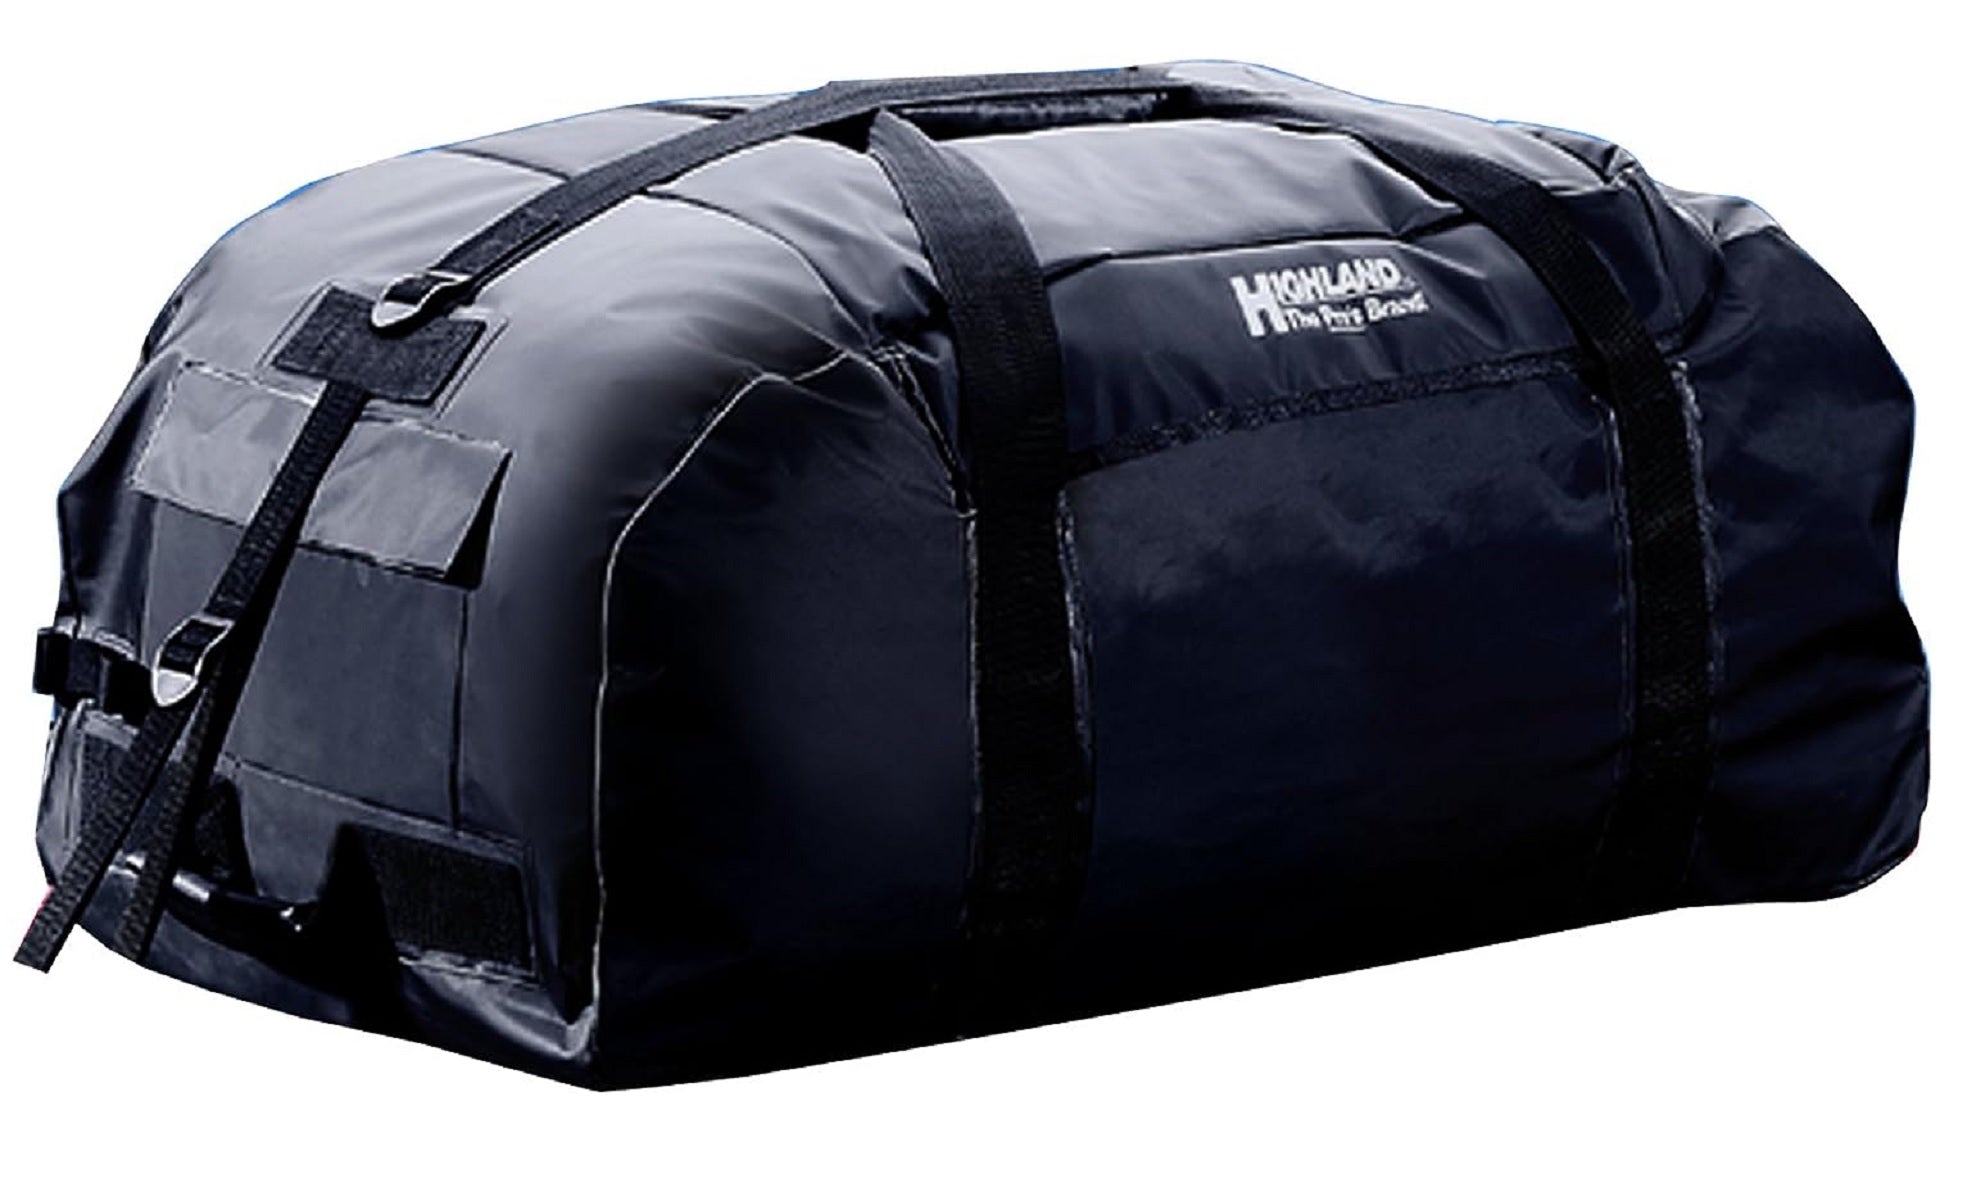 Highland 1039600 Rainproof Car Top Luggage with Wheels